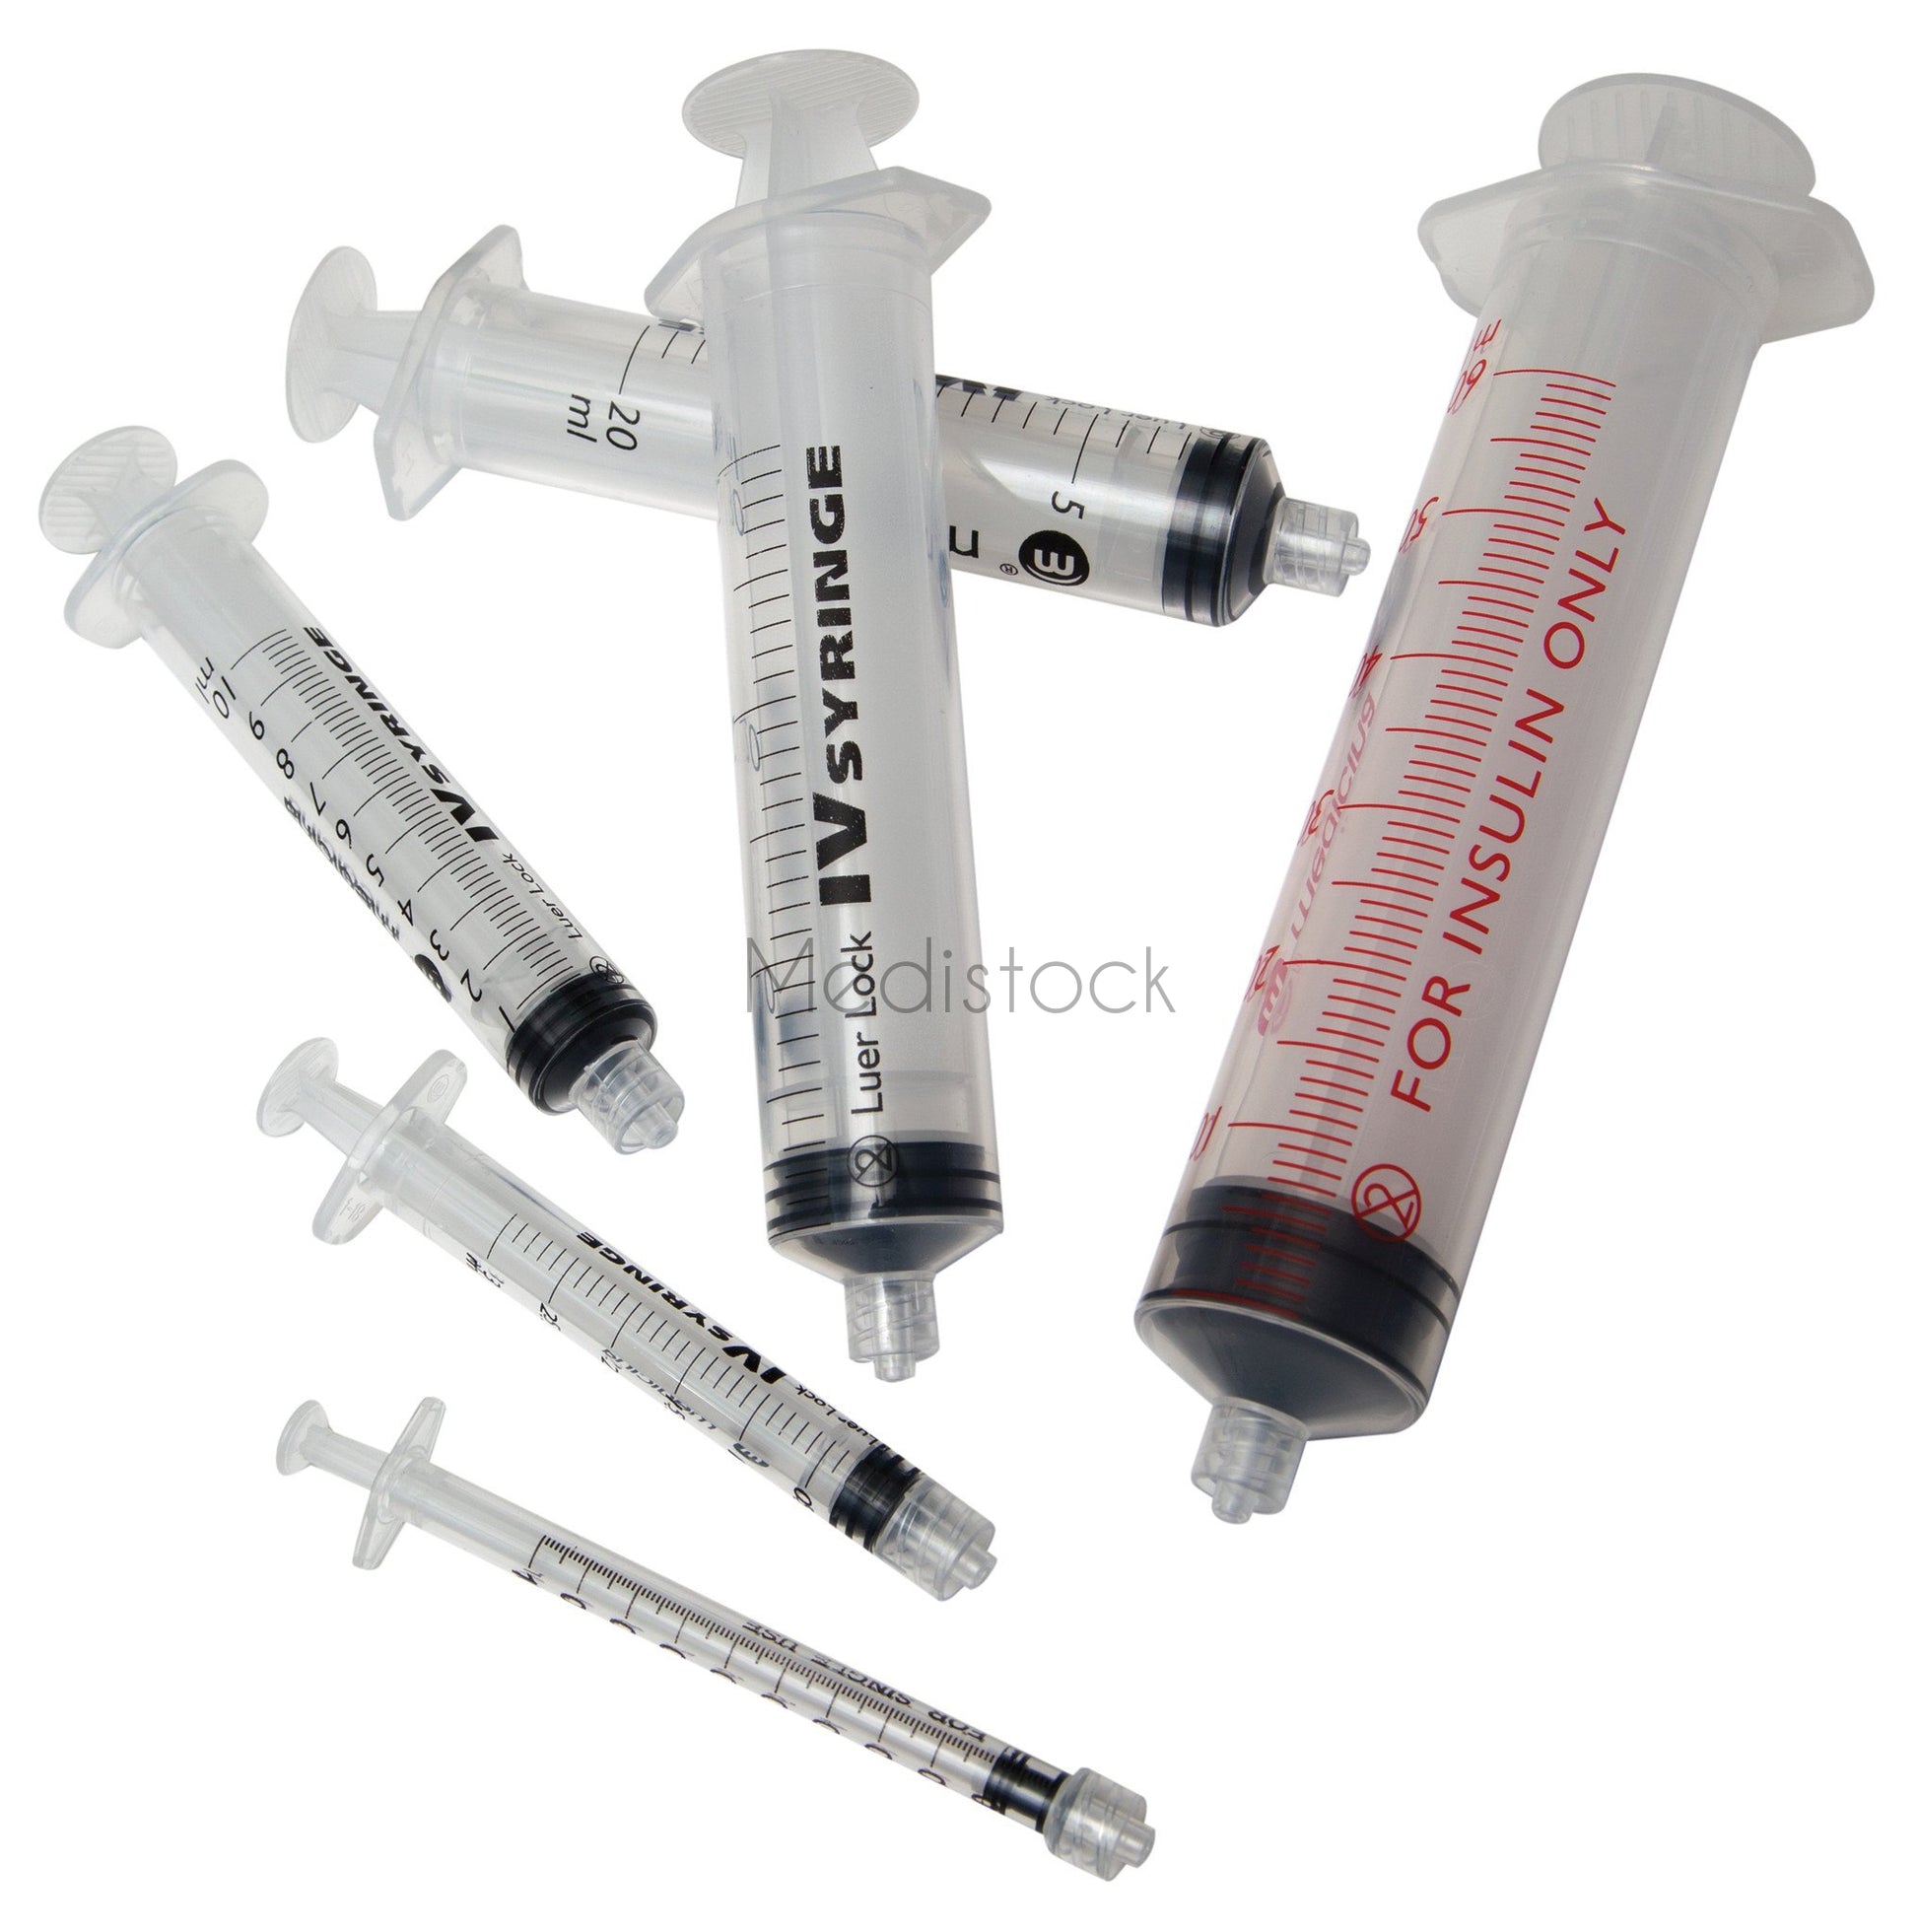 Syringe Hypodermic 20ml Luer Lock tip, Sterile, Disposable, box of 50 (Medicina or Terumo-Medistock Medical Supplies